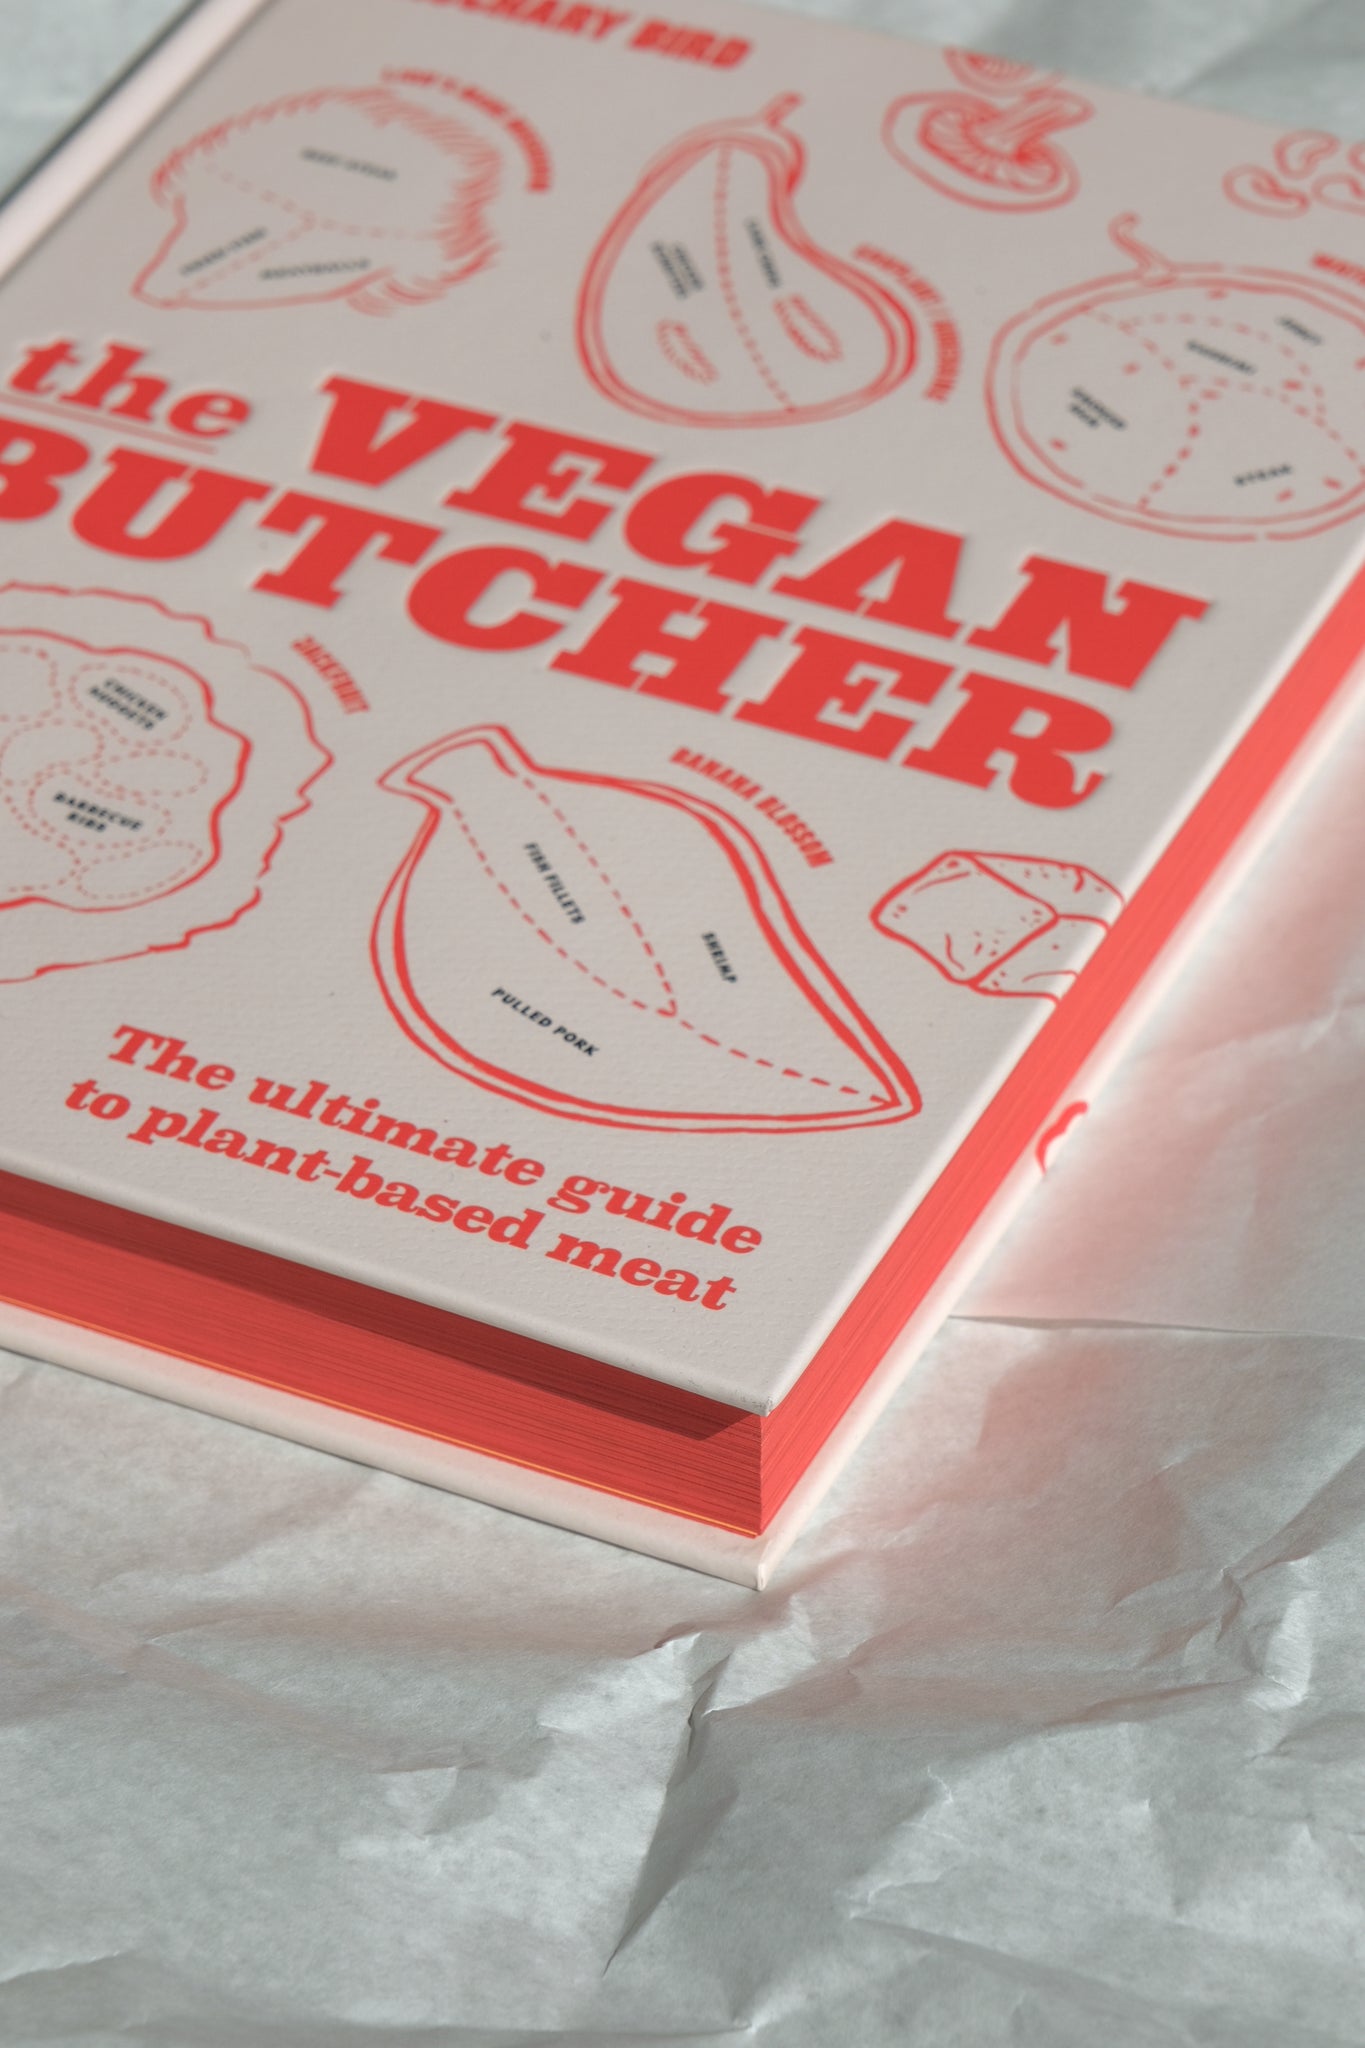 The Vegan Butcher-Smith Street Books-[interior]-[design]-KIOSK48TH